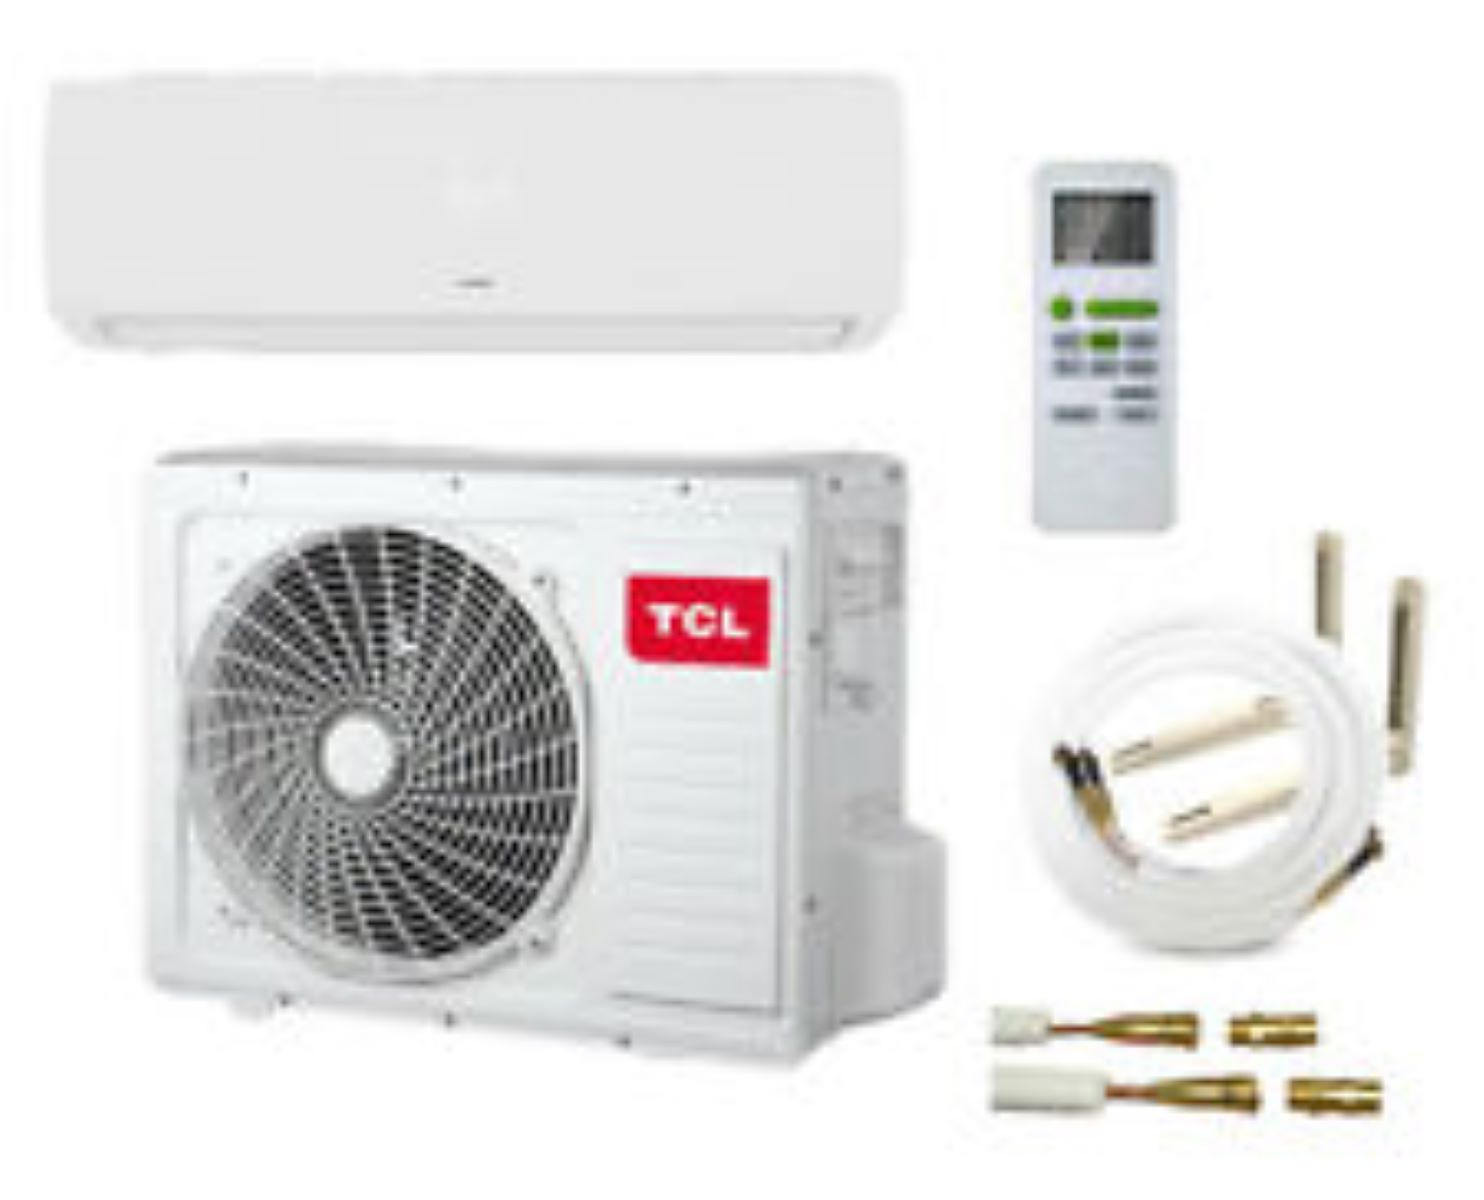 TCL TAC-12CHSD/XA41 A++, 35 Energieeffizienzklasse: Split-Klimapak. Raumgröße: Klimagerät QC Max. m² Weiß